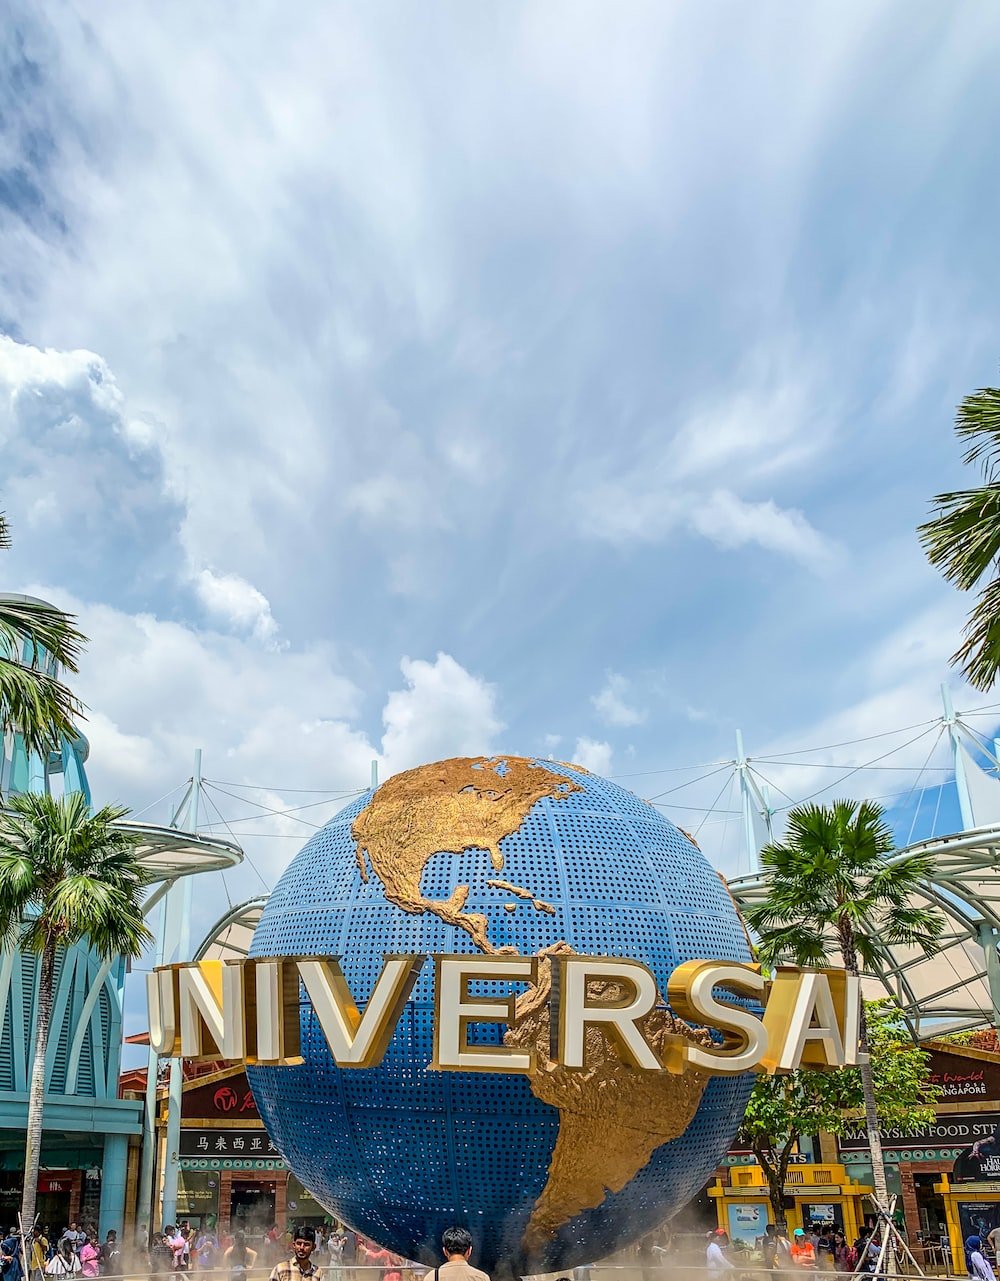 Universal Studios Singapore Picture. Download Free Image